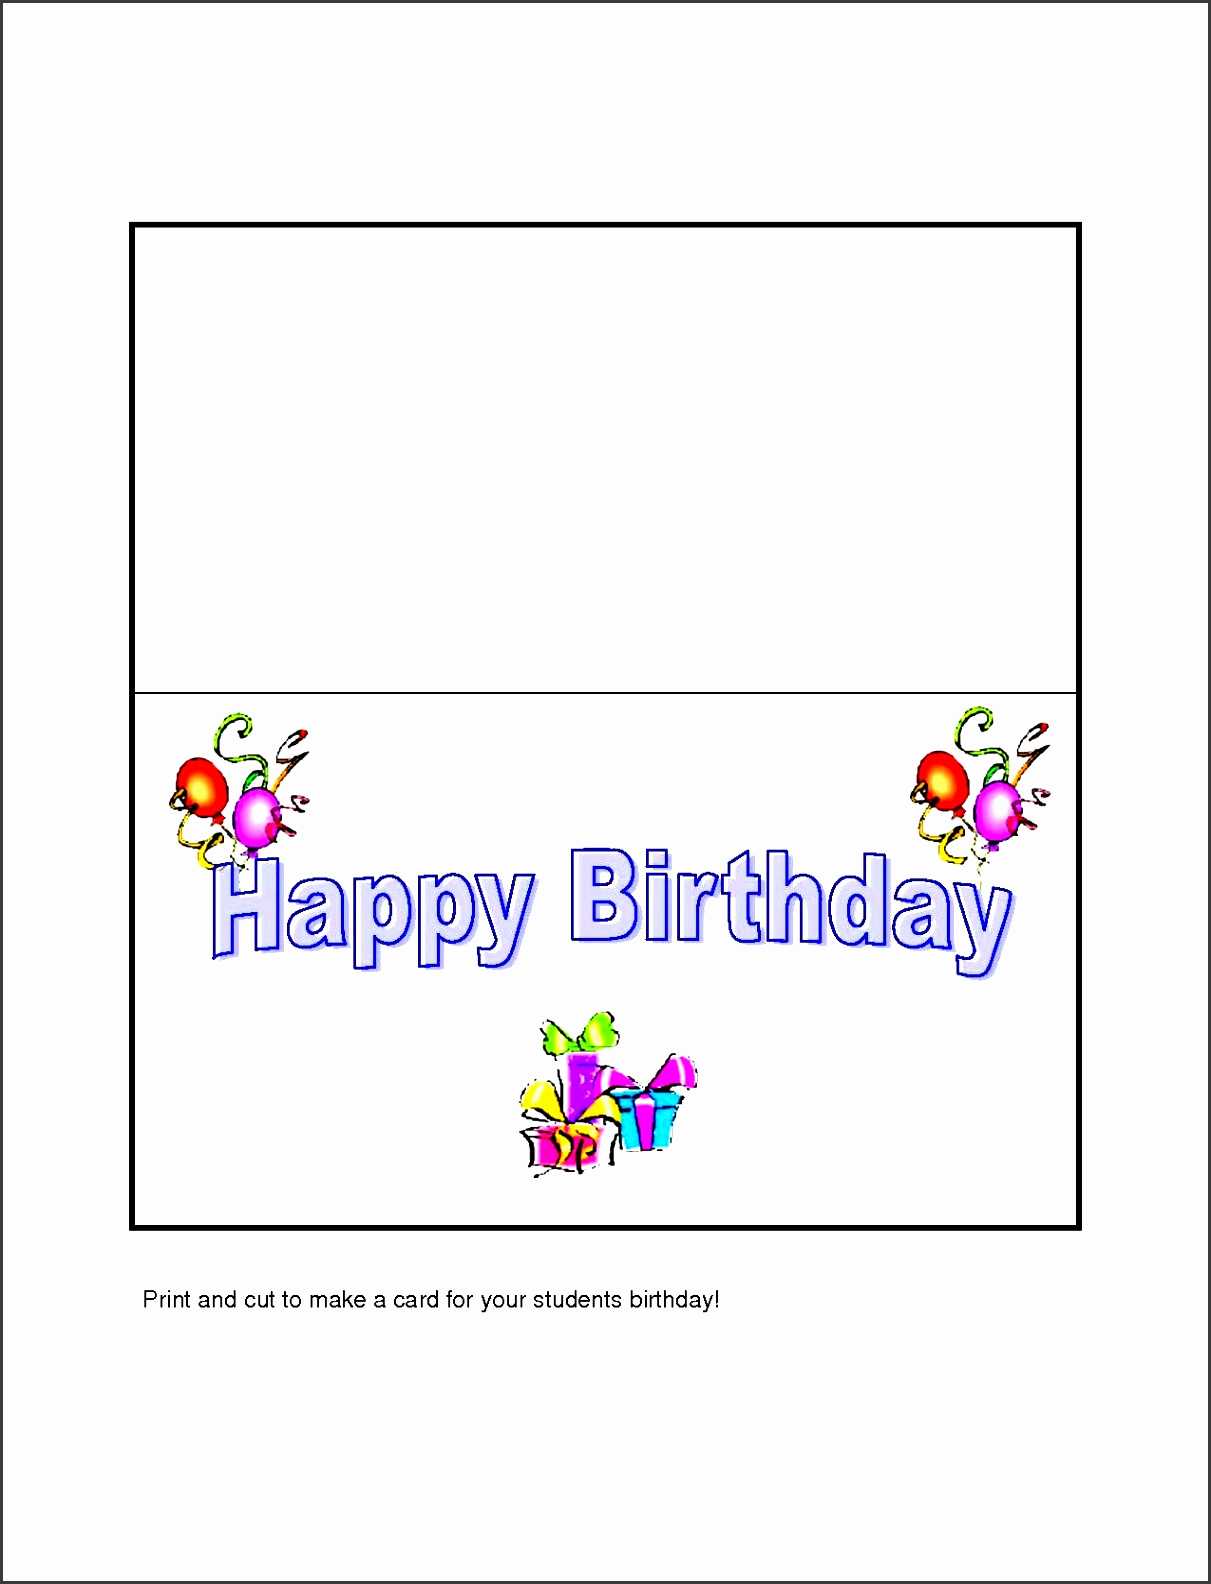 Beautiful 10 Free Microsoft Word Greeting Card Templates Regarding Microsoft Word Birthday Card Template